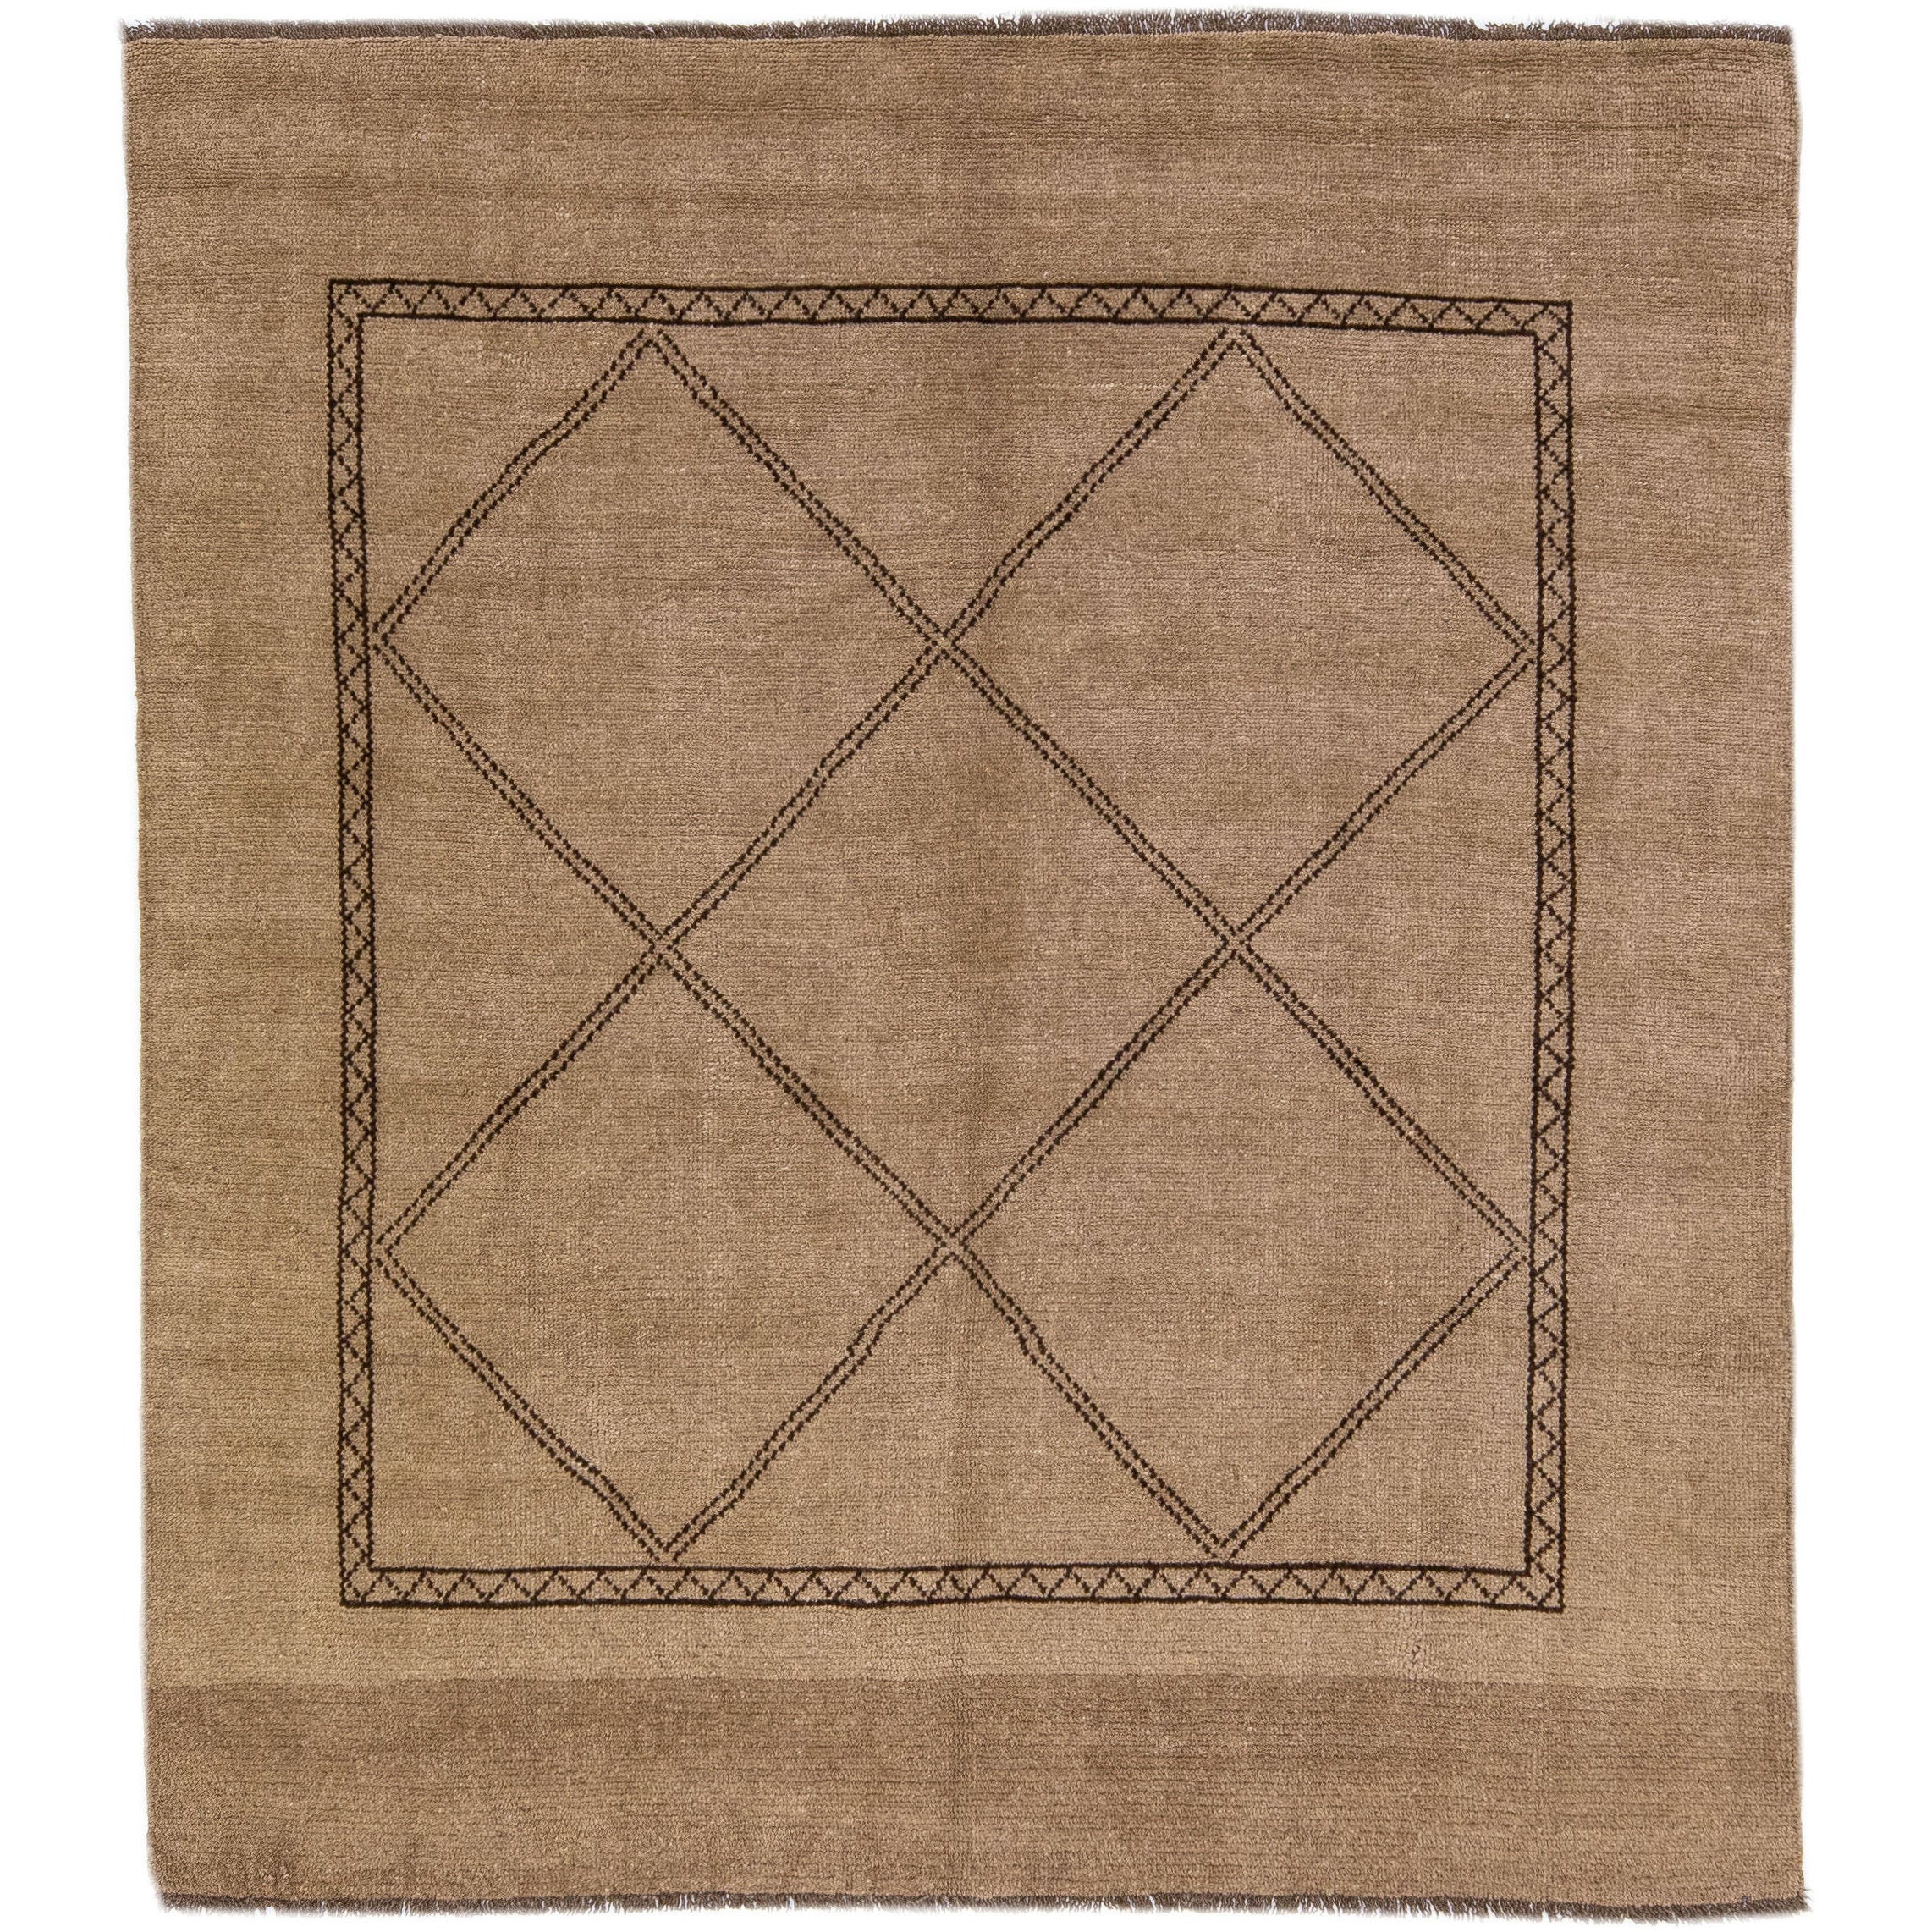 Modern Moroccan Style Brown Handmade Geometric Square Wool Rug by Apadana